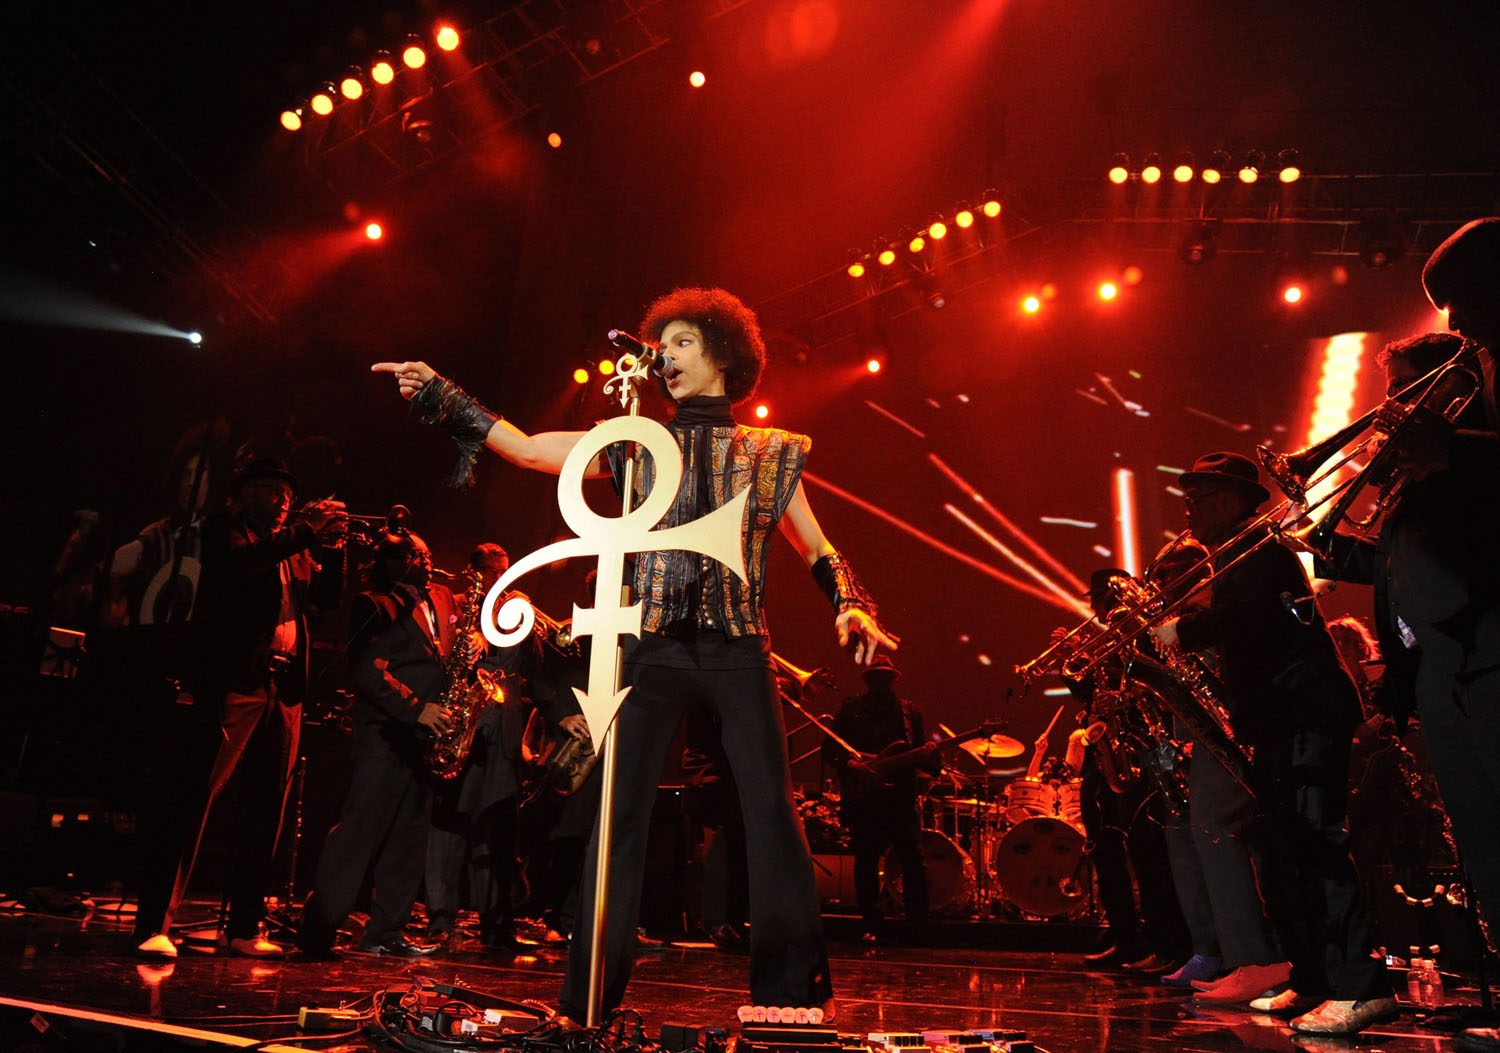 Prince performs at Mohegan Sun Arena on Dec. 29, 2013 in Uncasville, Connecticut.